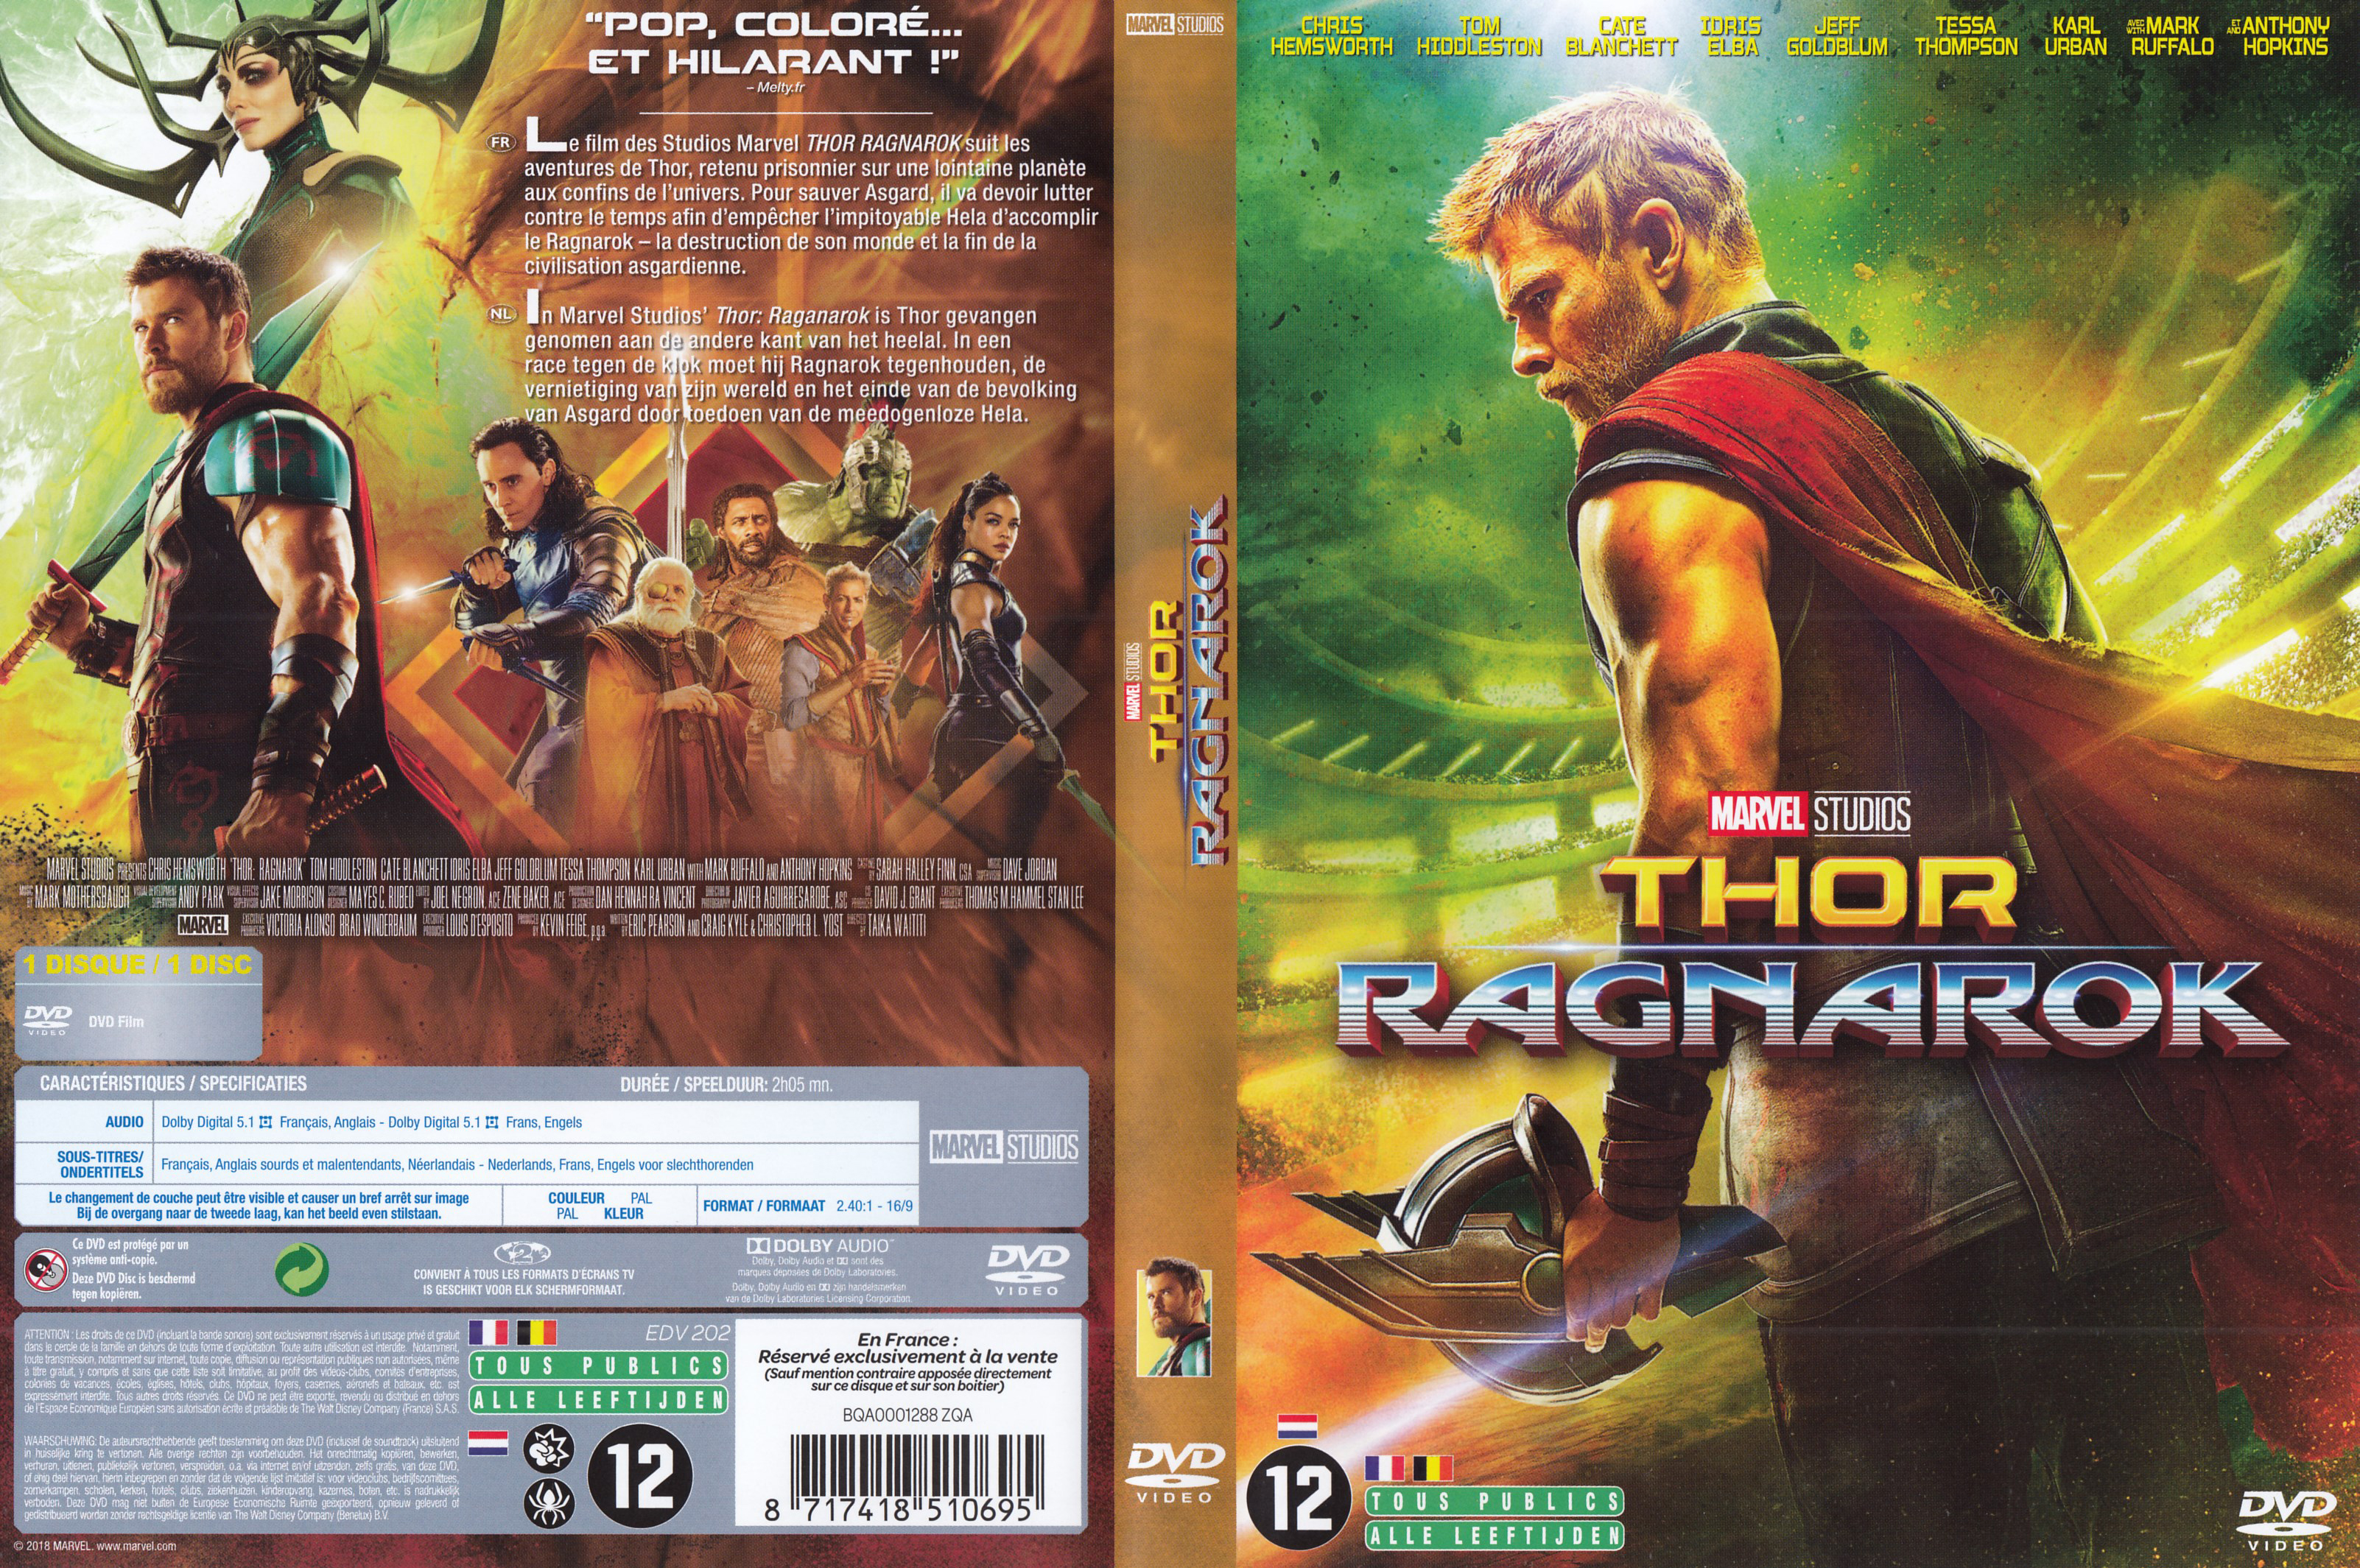 Jaquette DVD Thor Ragnarok